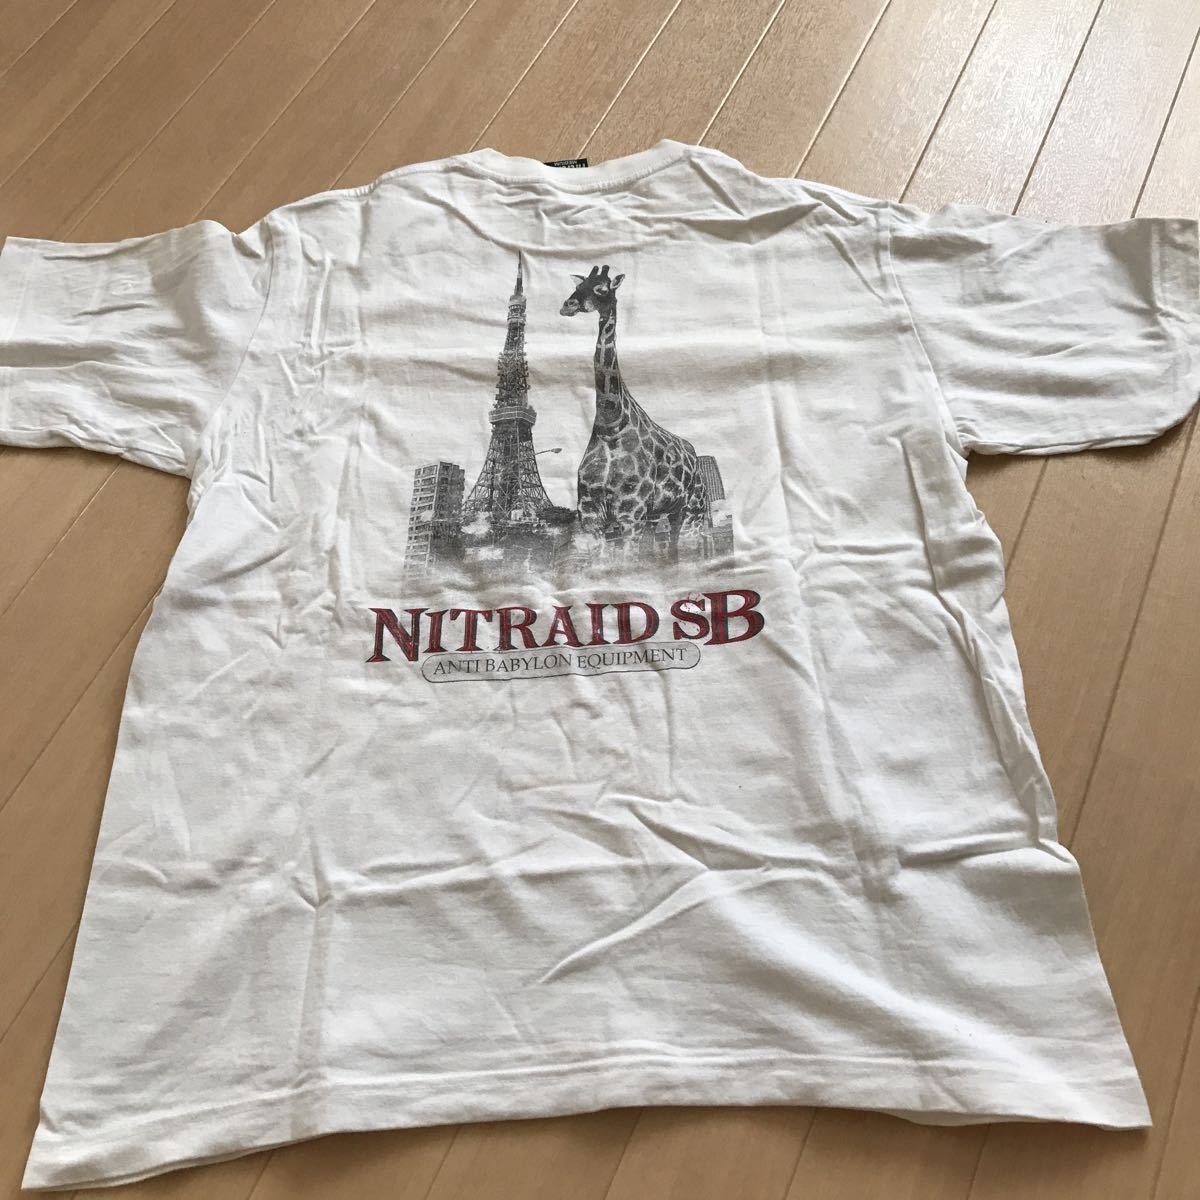  prompt decision nitraid T-shirt 